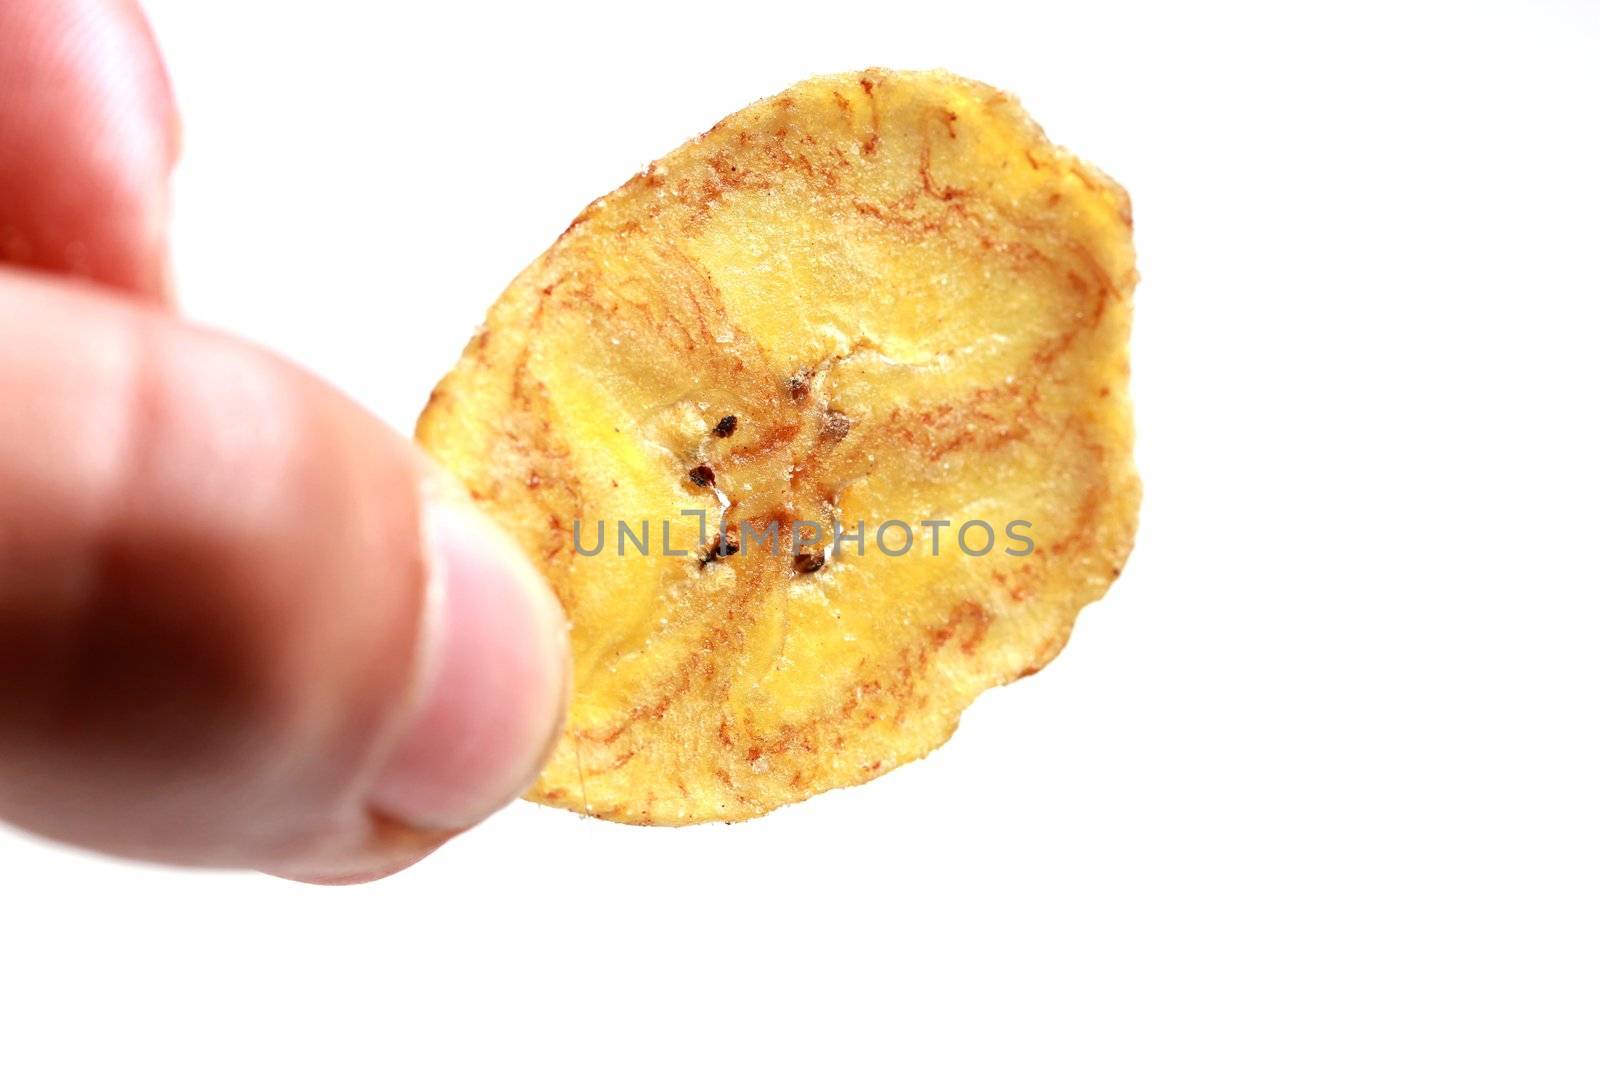 banana chip in hand by Teka77